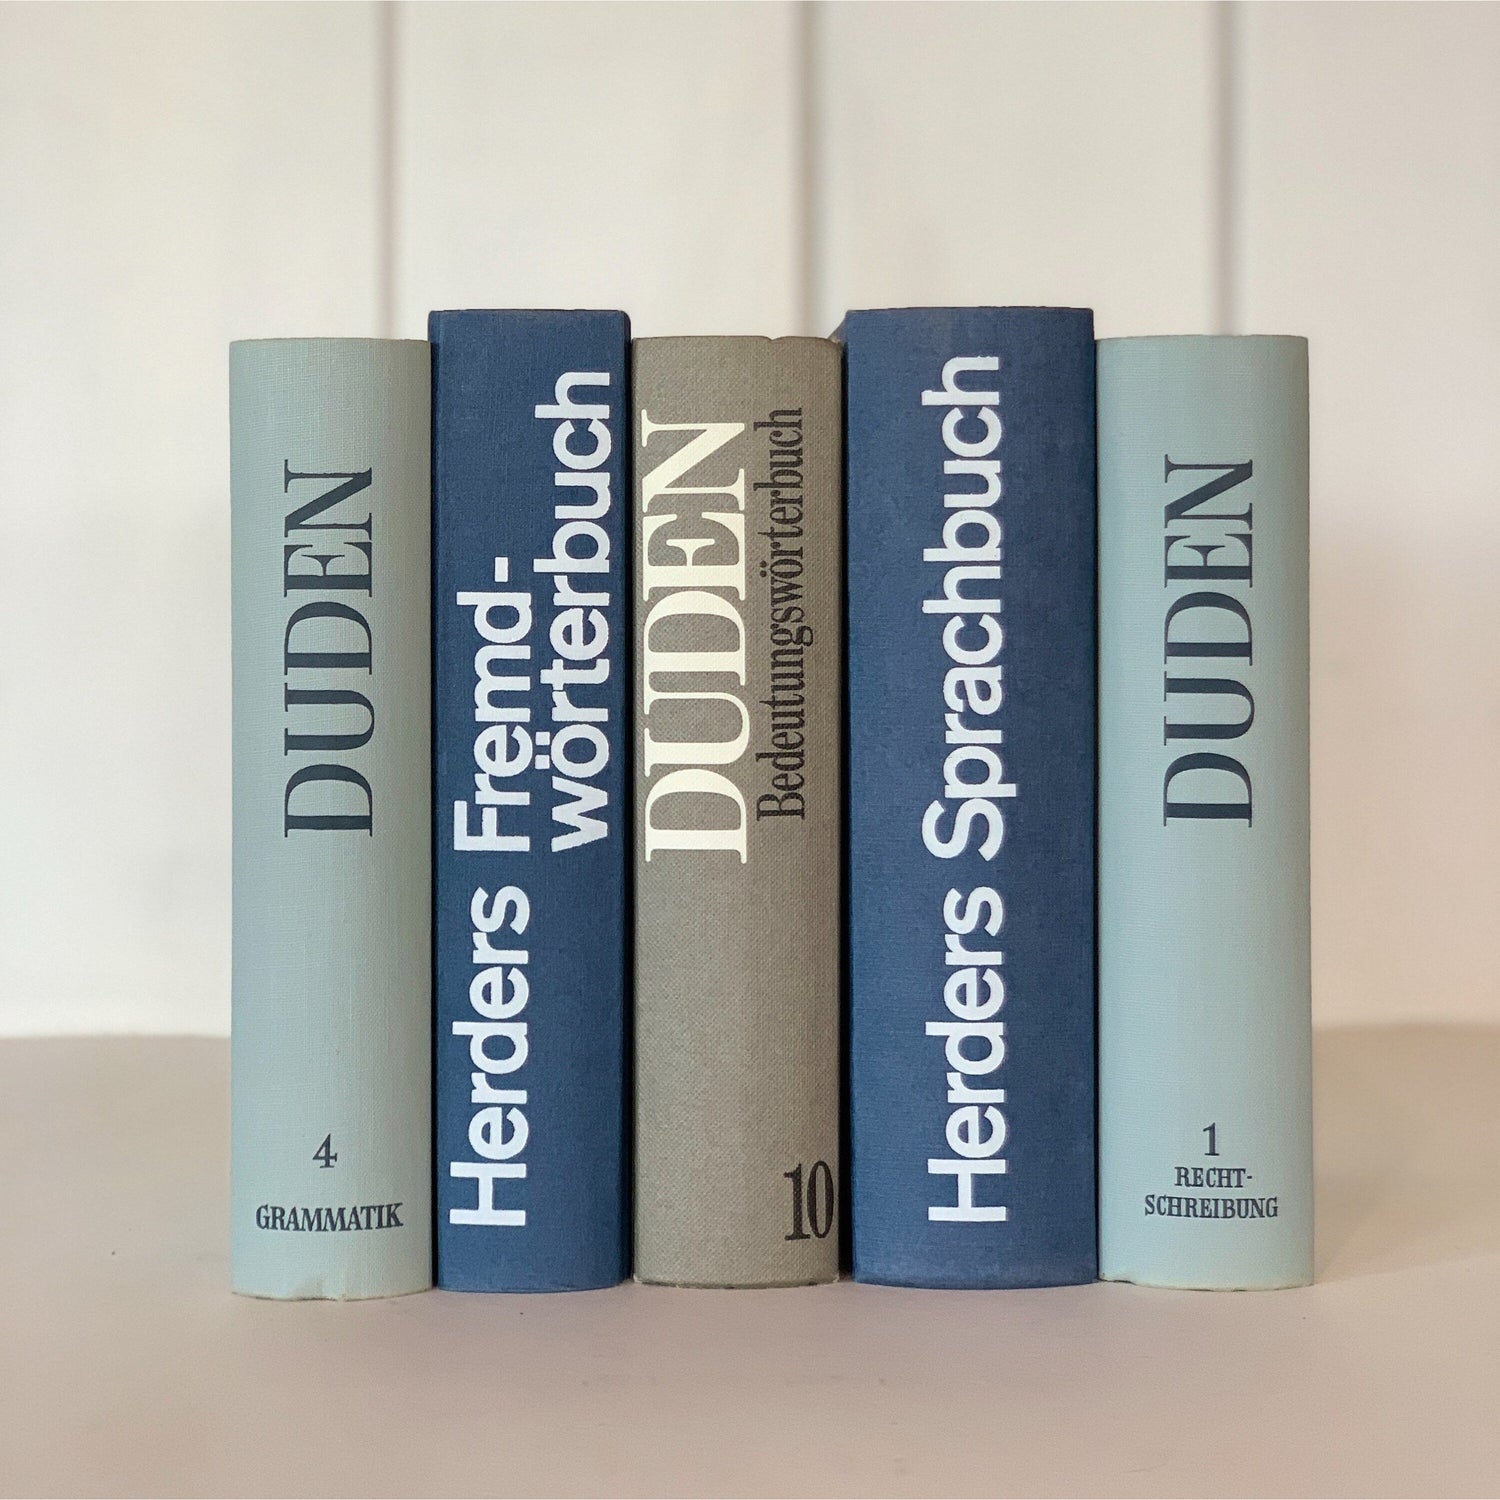 German Language Duden Dictionary Set, Mid Century Book Bundle